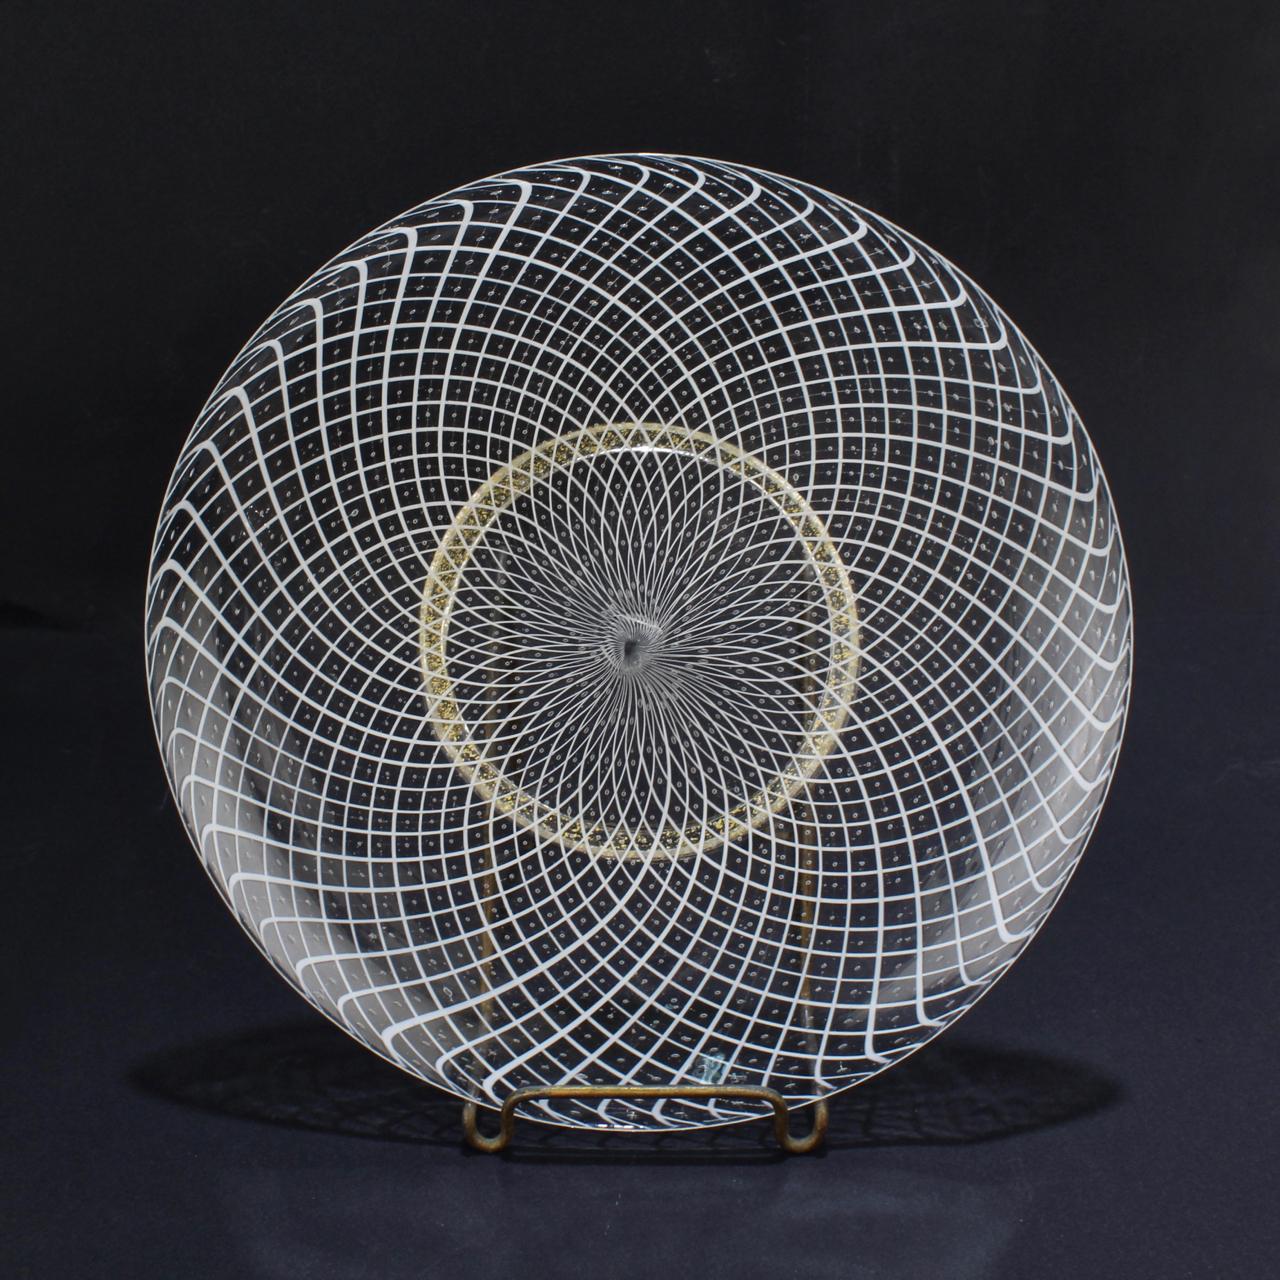 20th Century Set of 10 Venetian or Murano Glass Reticulo Filigrana Bowls and Plates